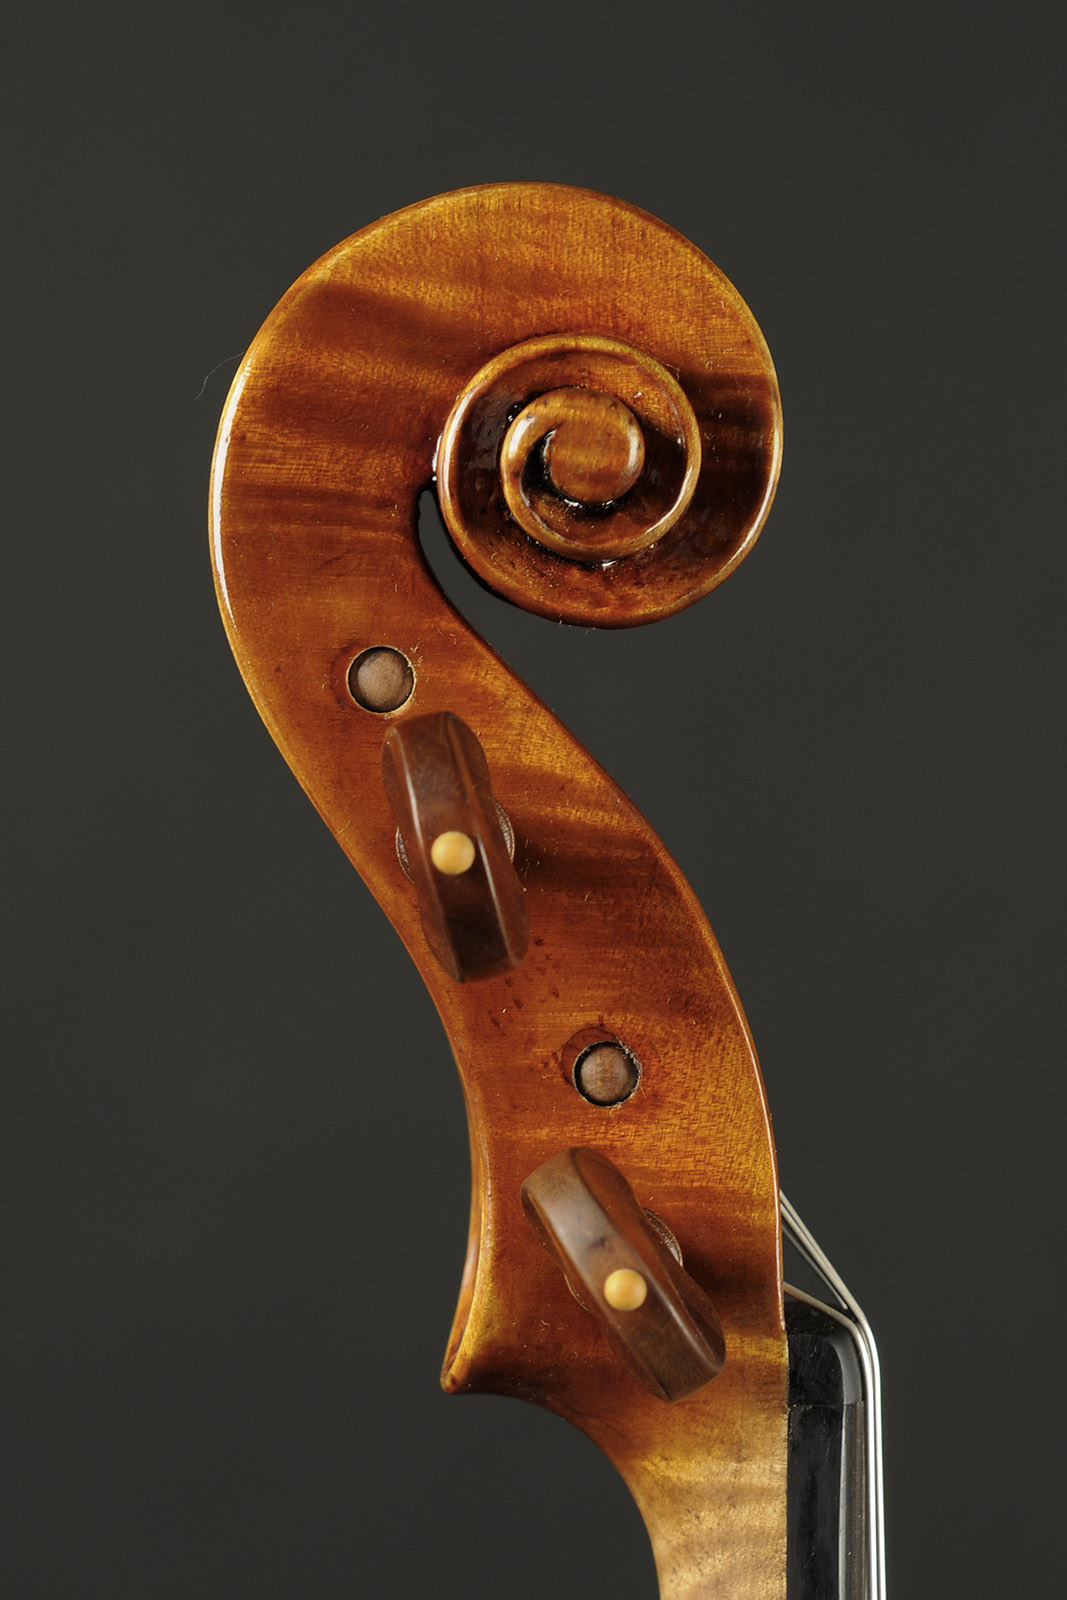 Antonio Stradivari Cremona 1672 “Renaissance Wood“ cm 42 - Image 6